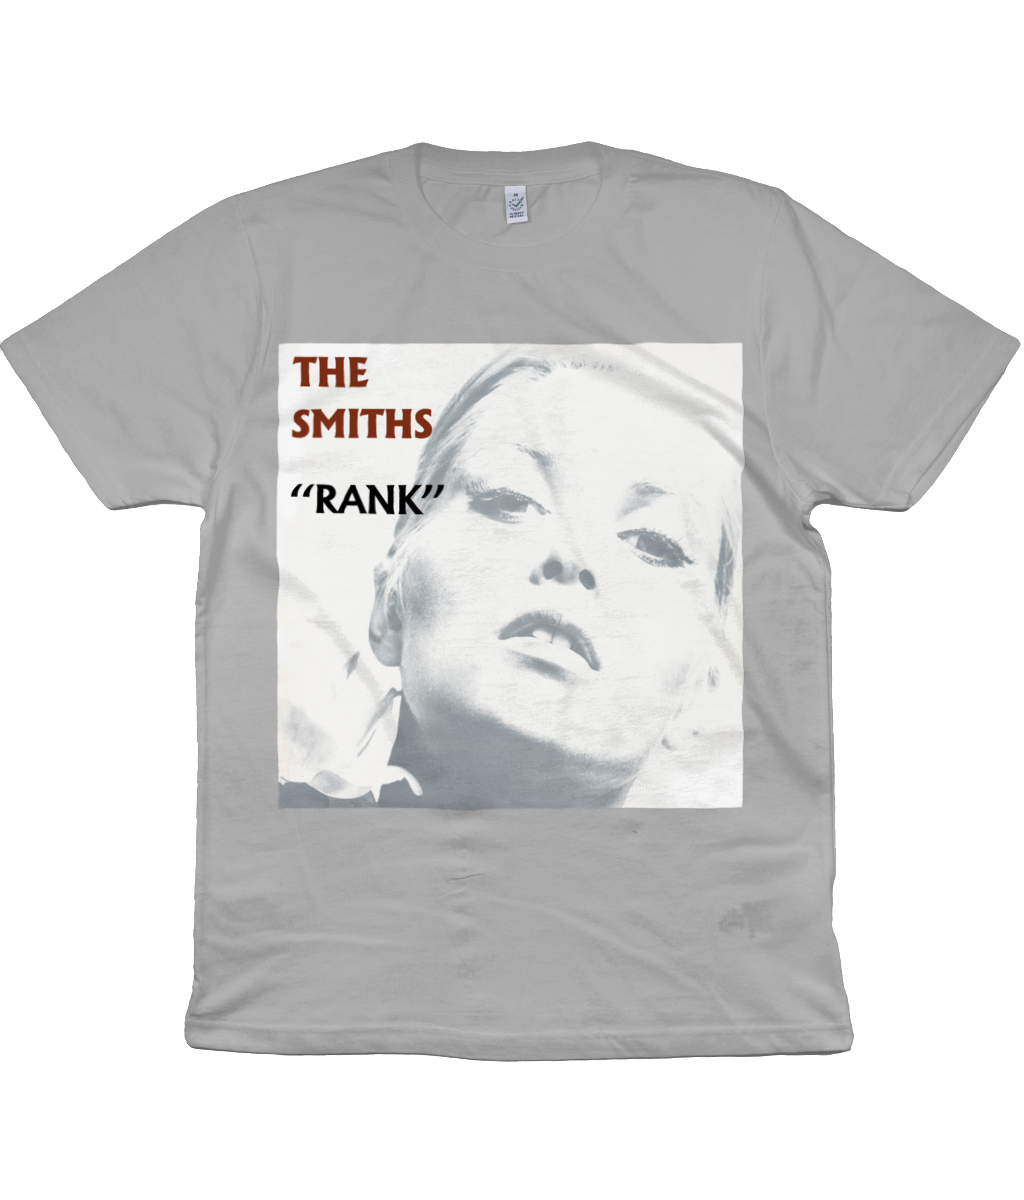 The Smiths - RANK - 1988